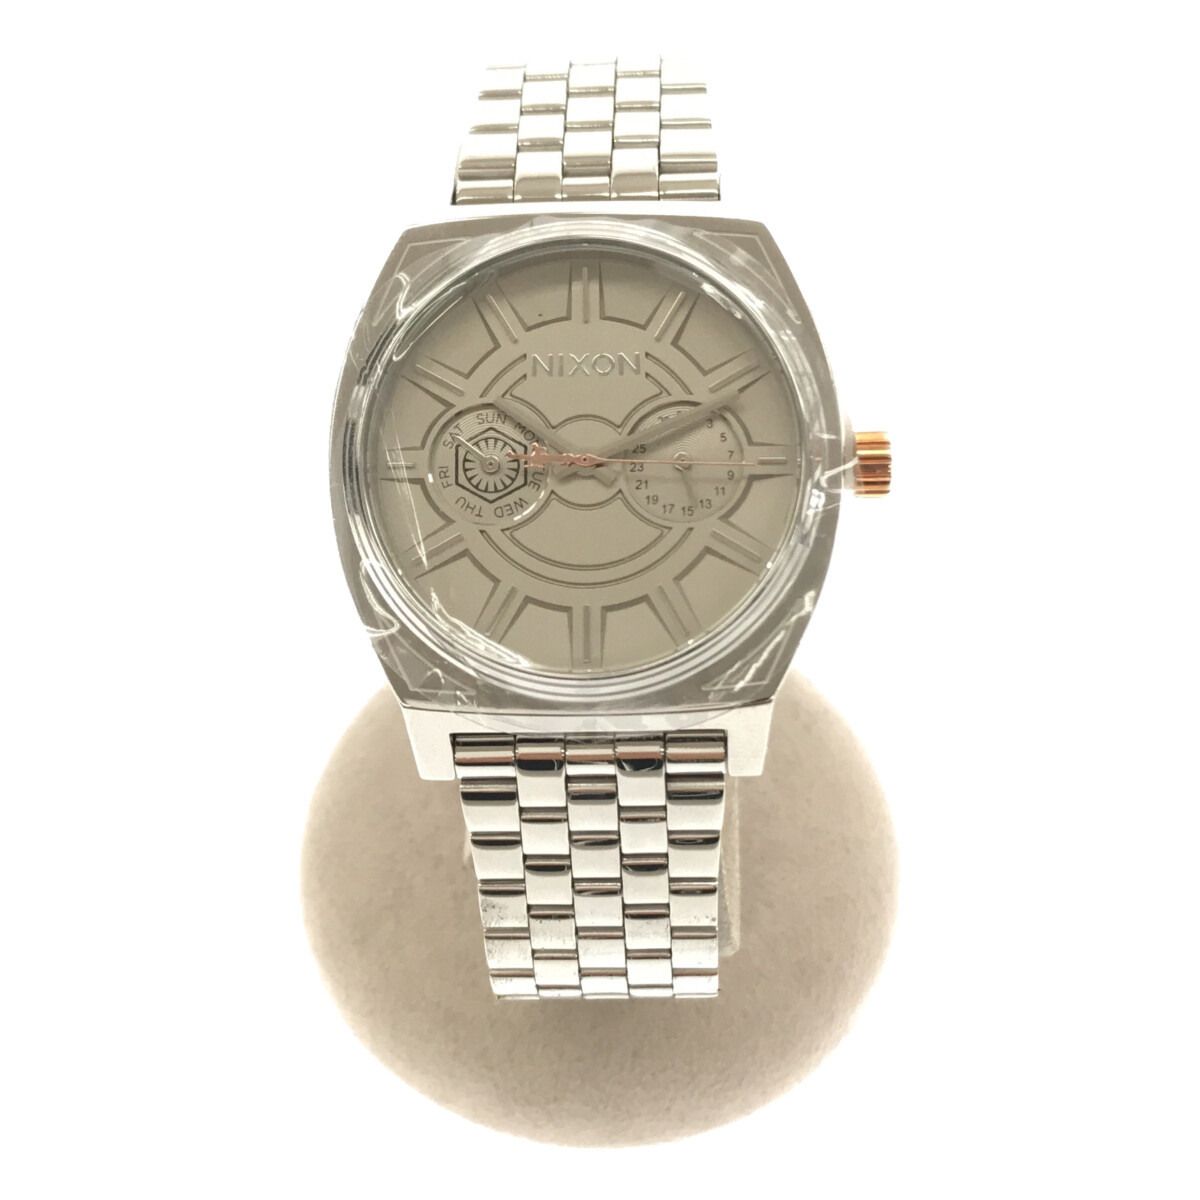 NIXON 腕時計 タイムテラー STAR WARS コラボ - USED MARKET NEXT51